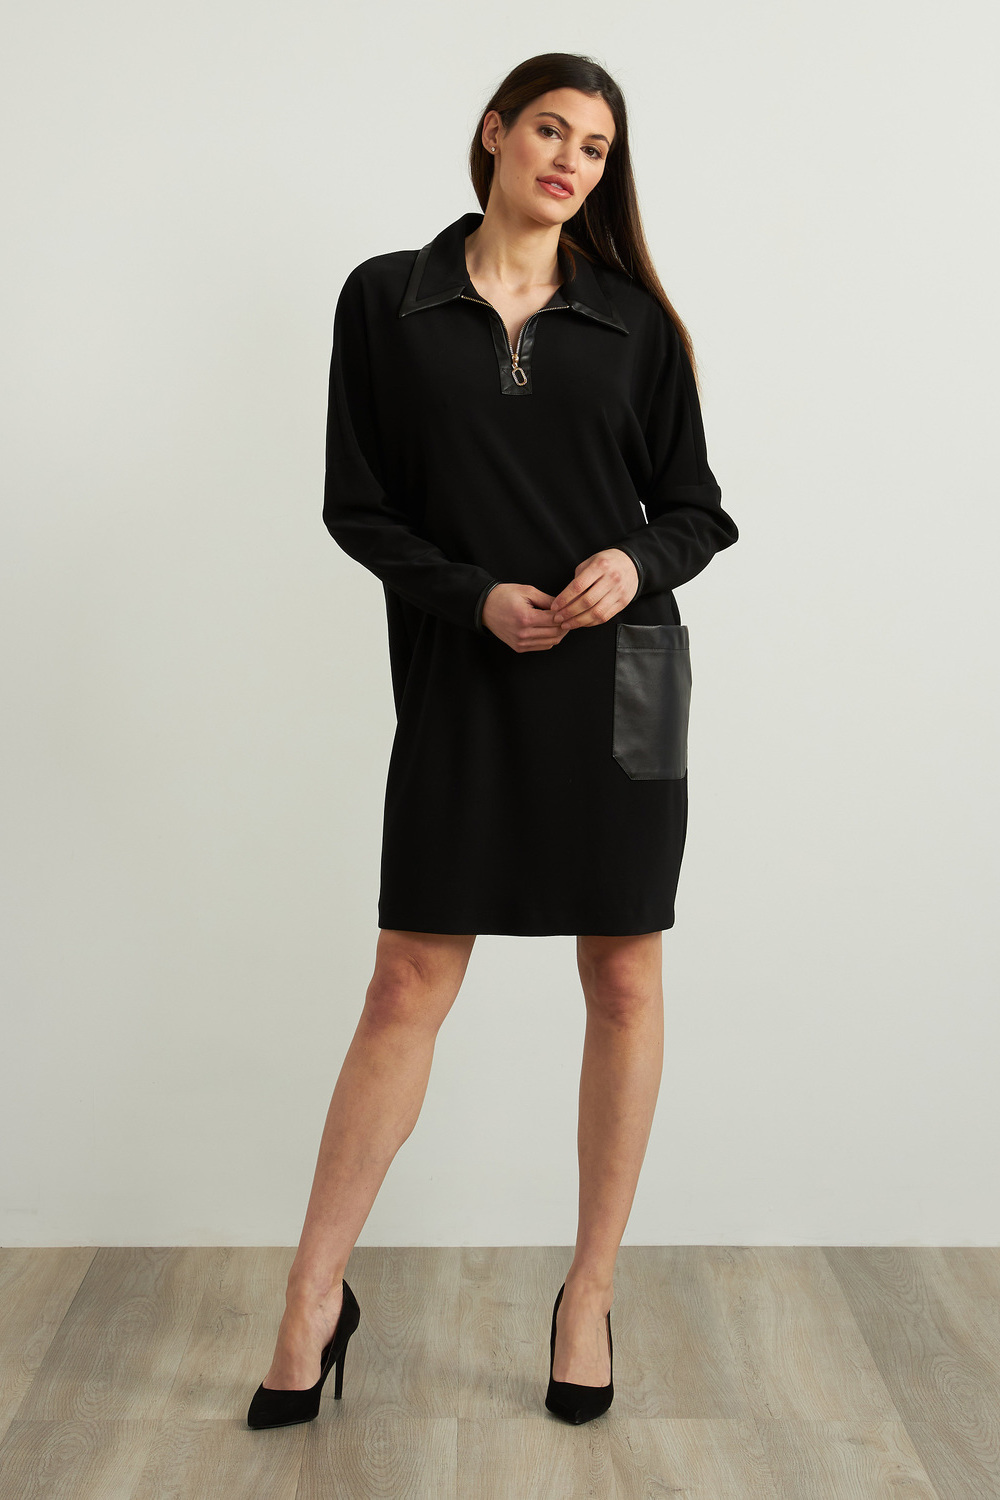 Joseph Ribkoff Leatherette Accent Dress Style 213415. Black